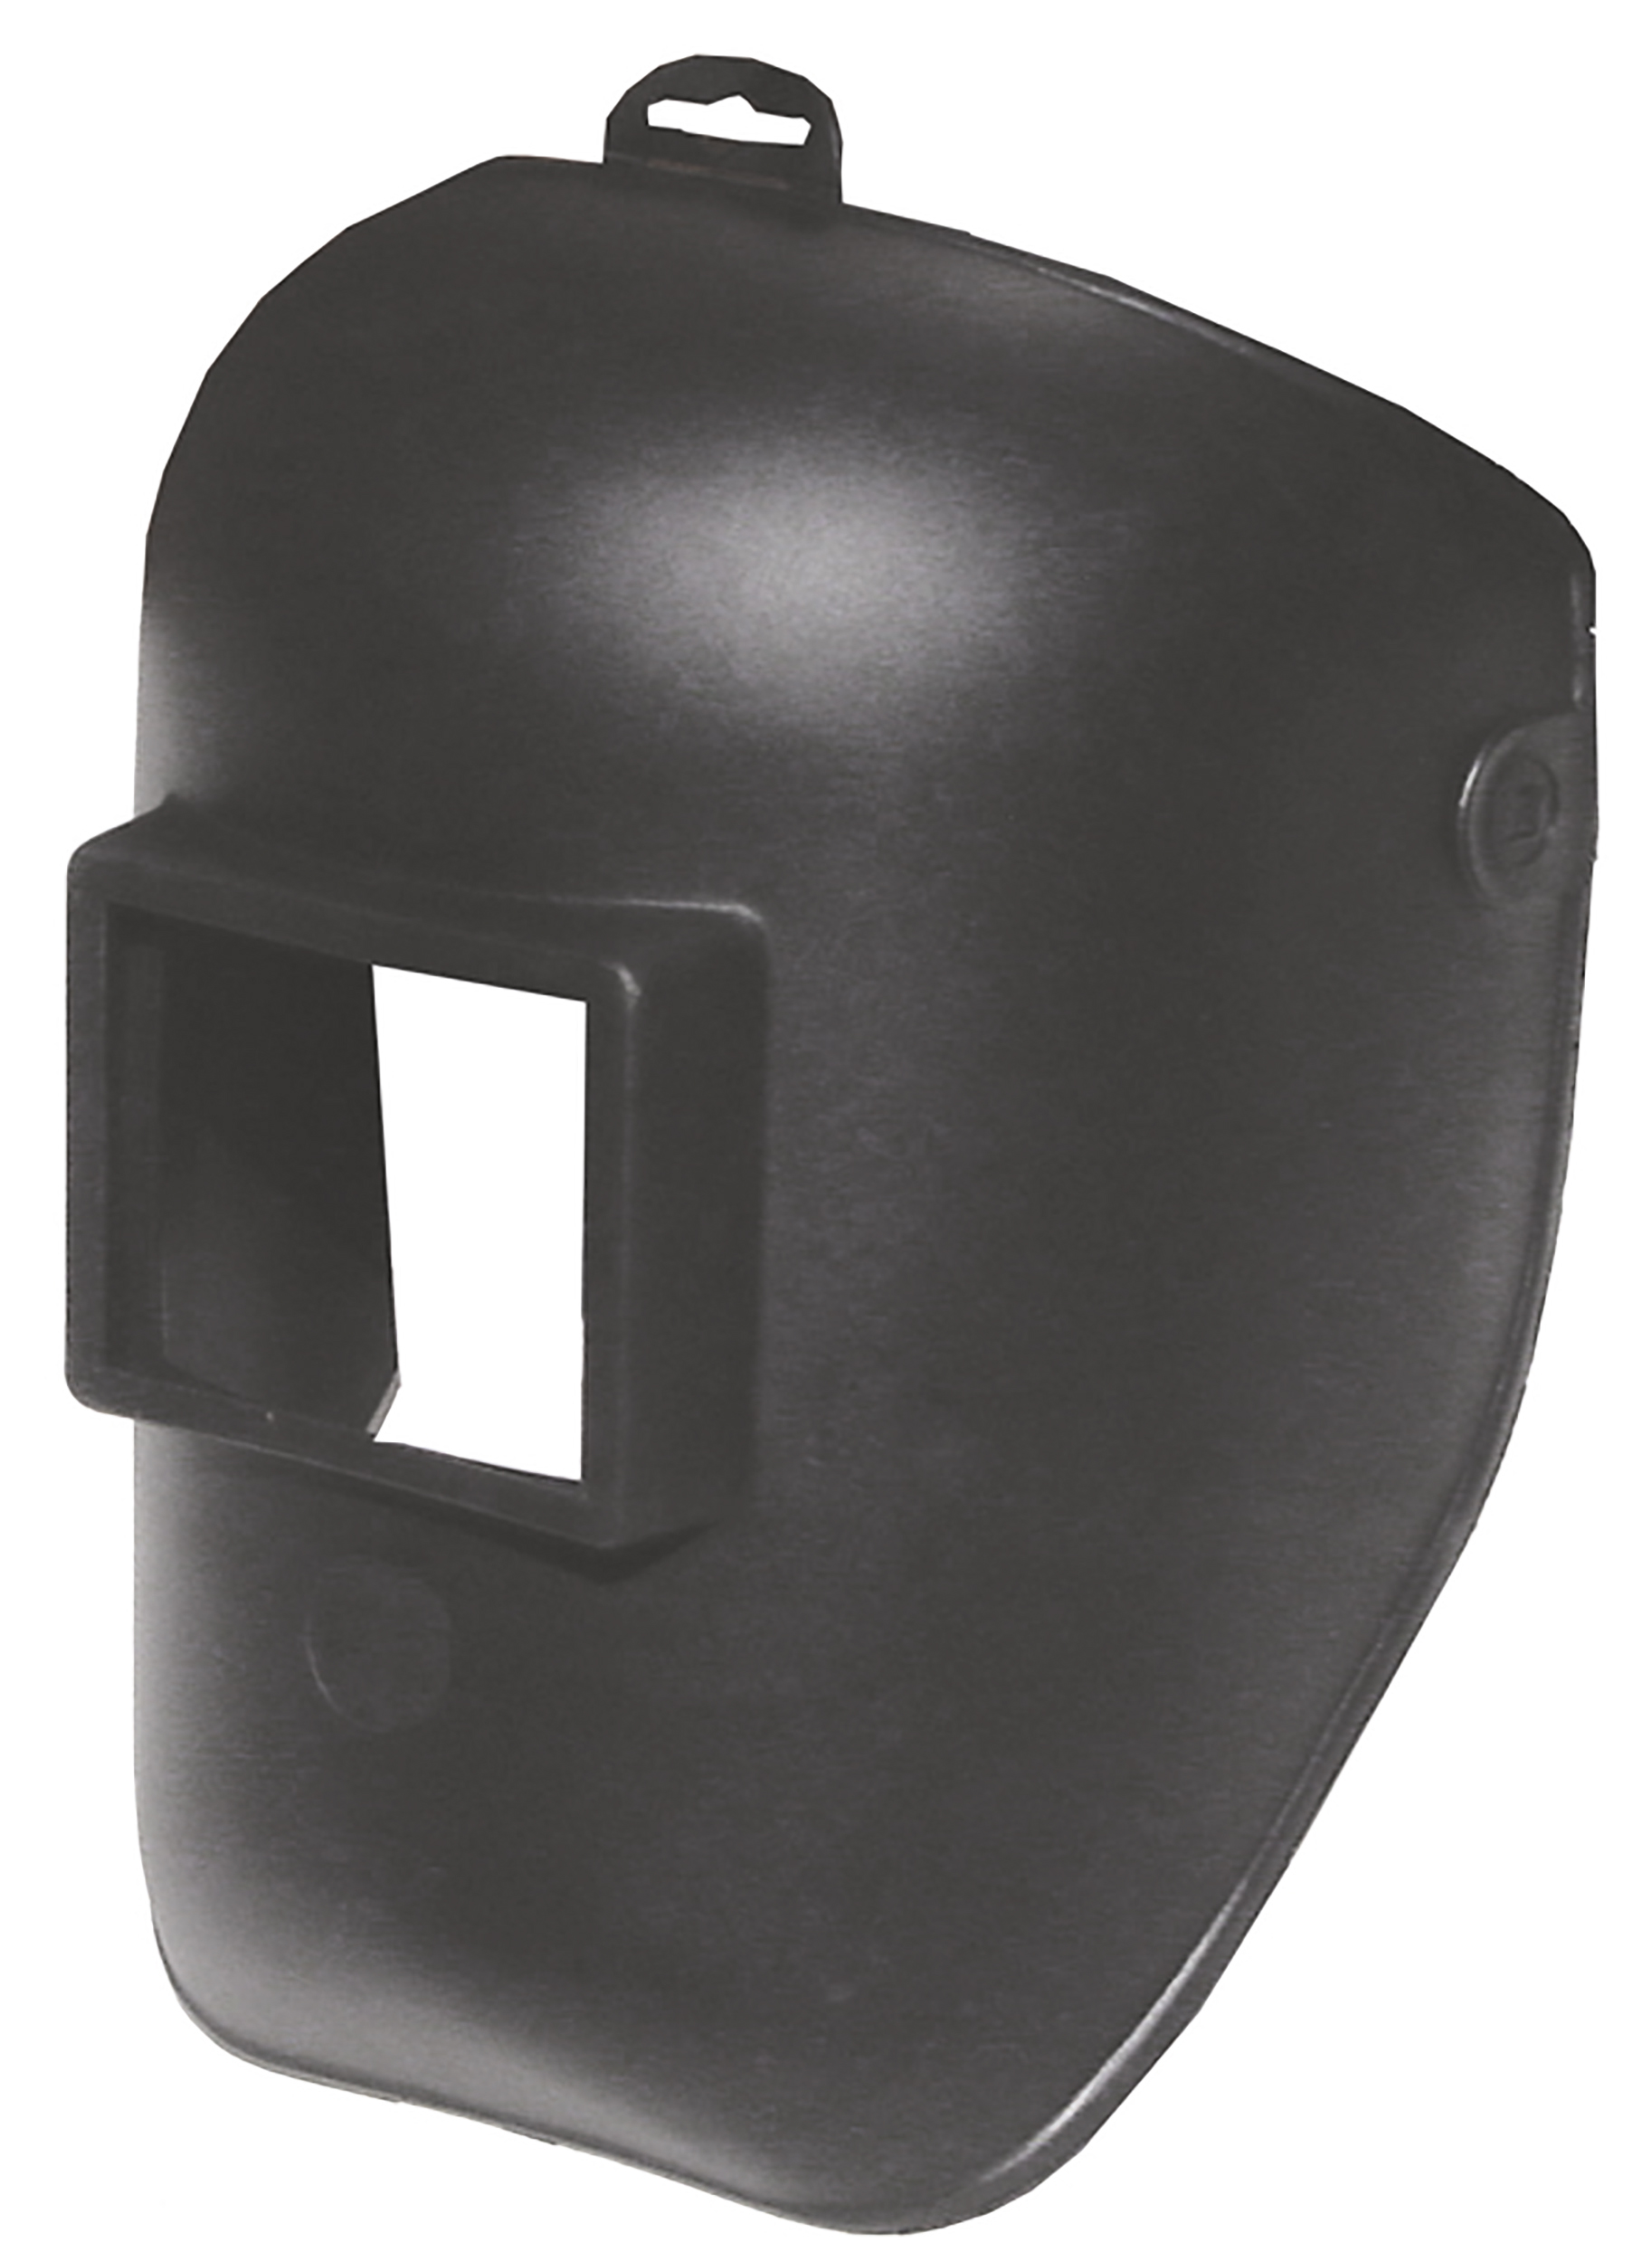 Head protection shield plastic 90x110 adjustable headband, blister suspension